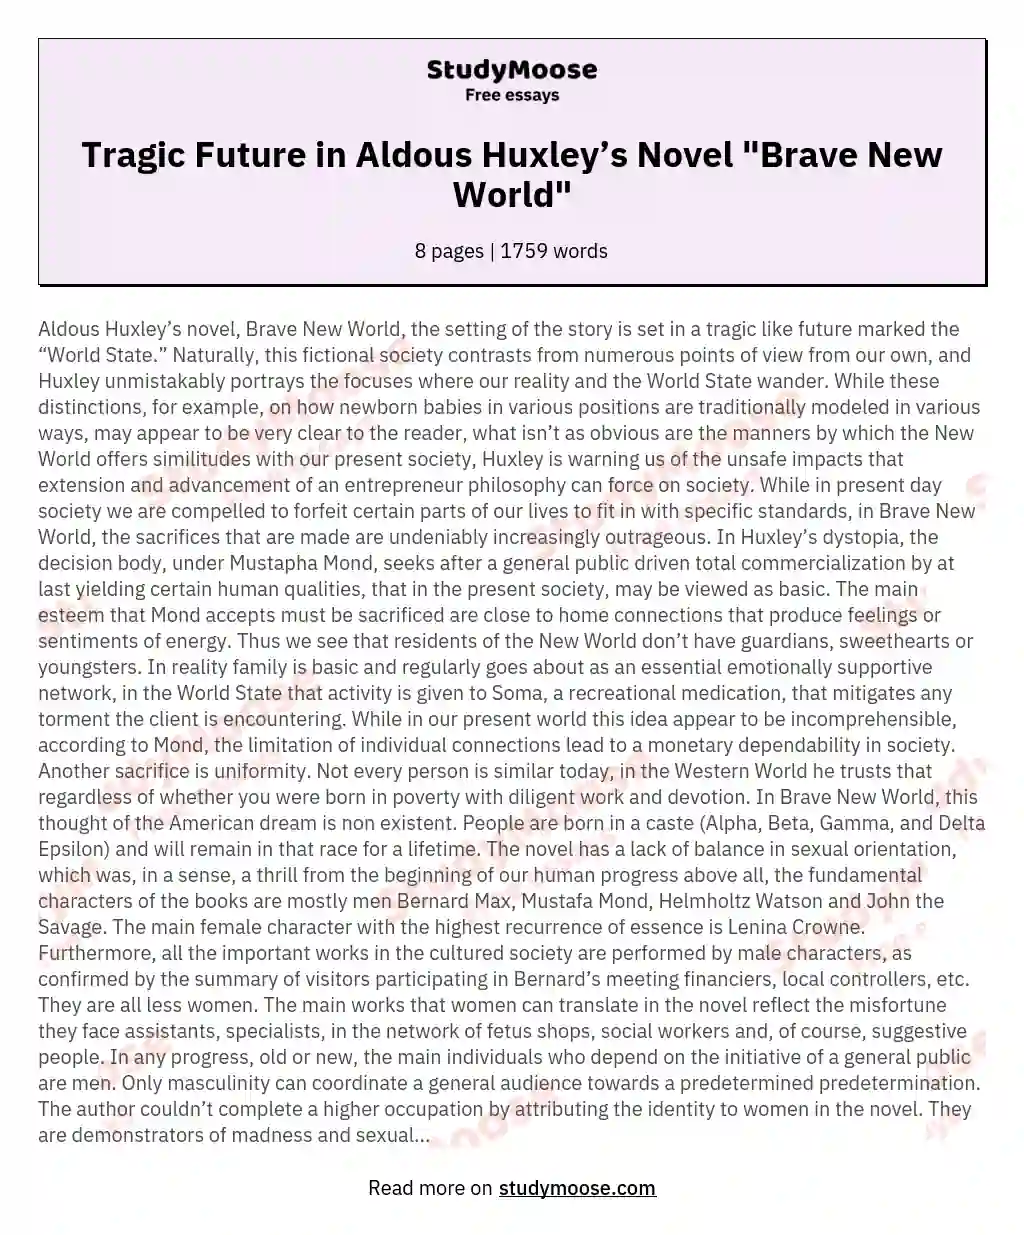 Tragic Future in Aldous Huxley’s Novel "Brave New World"